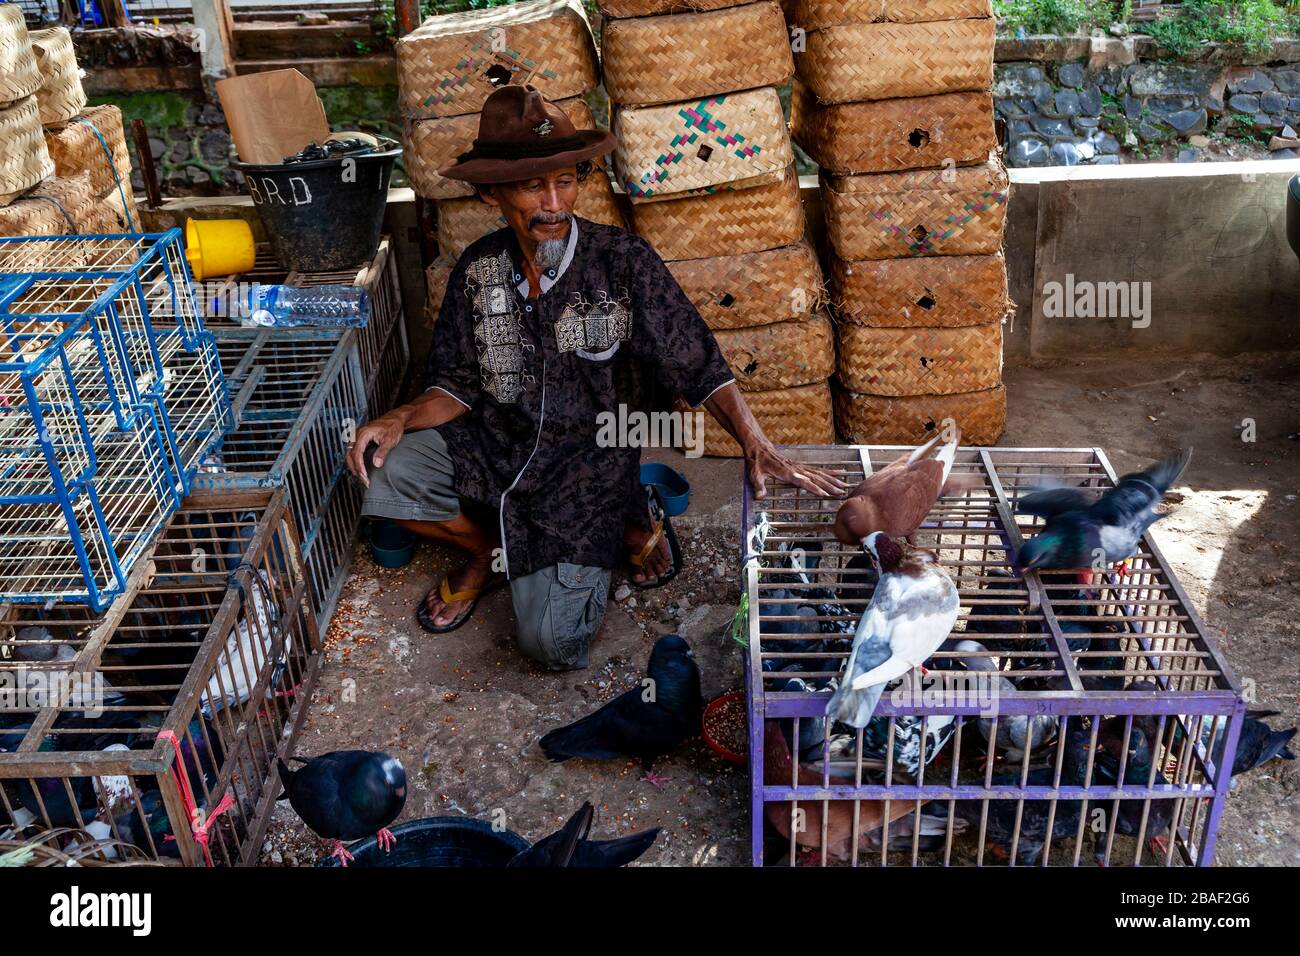 A Man Selling Birds At The Pramuka Bird Market, Jakarta, Indonesia. Stock Photo